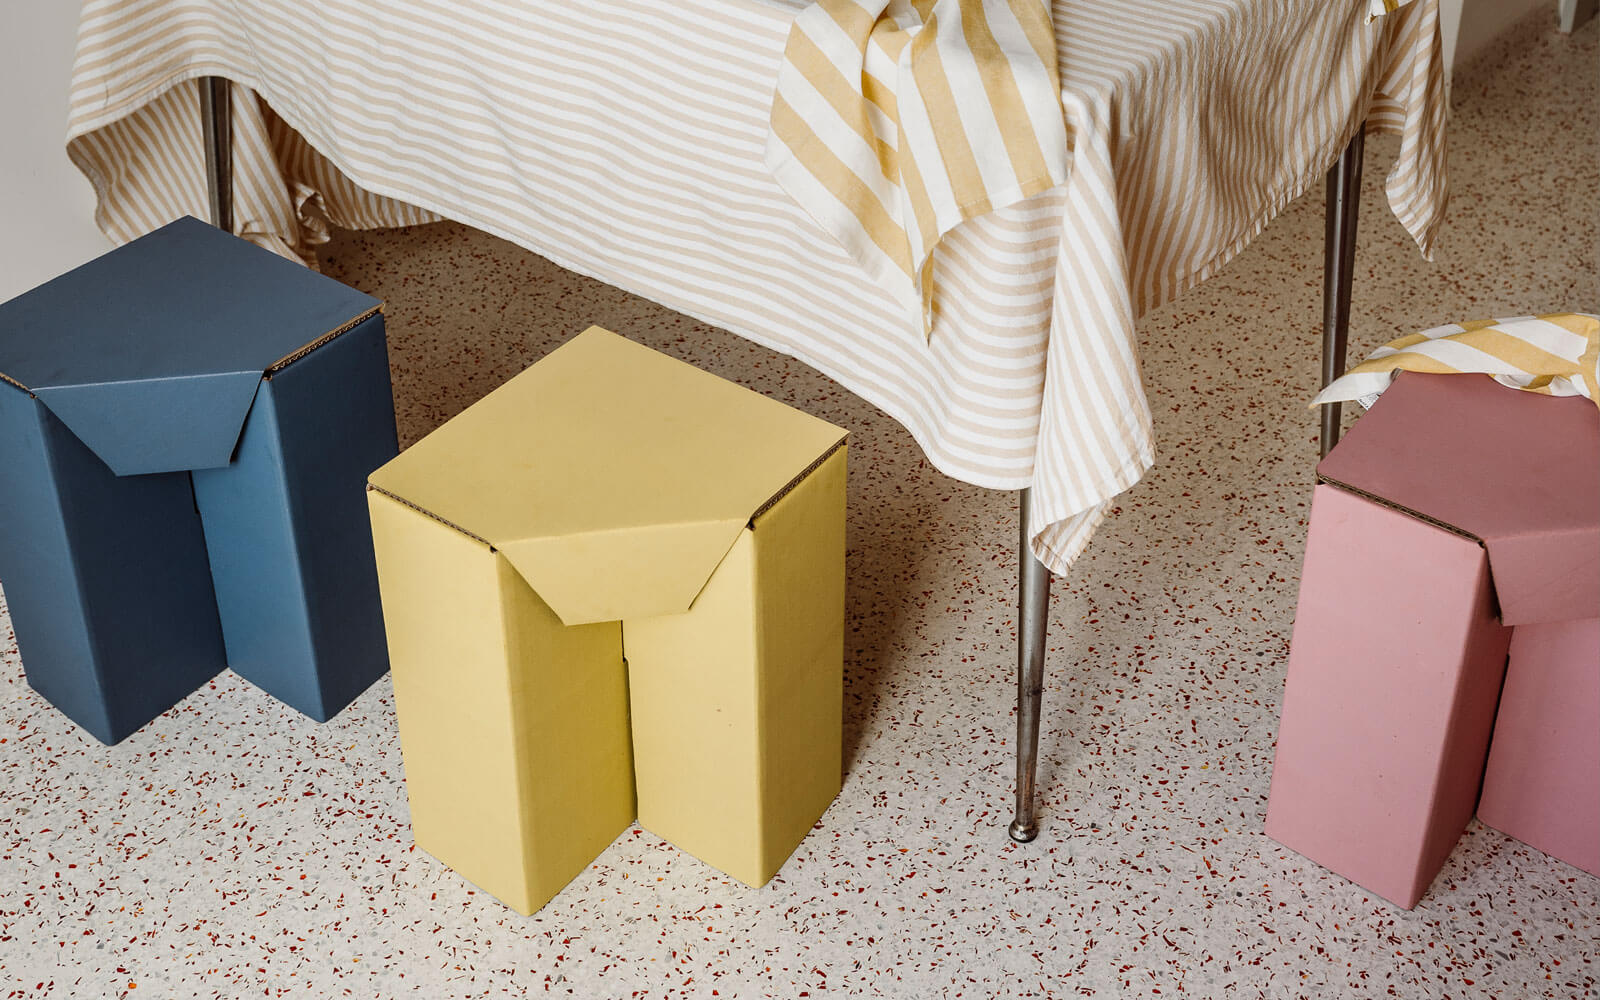 ROOM IN A BOX Hocker in rosa, gelb und blau